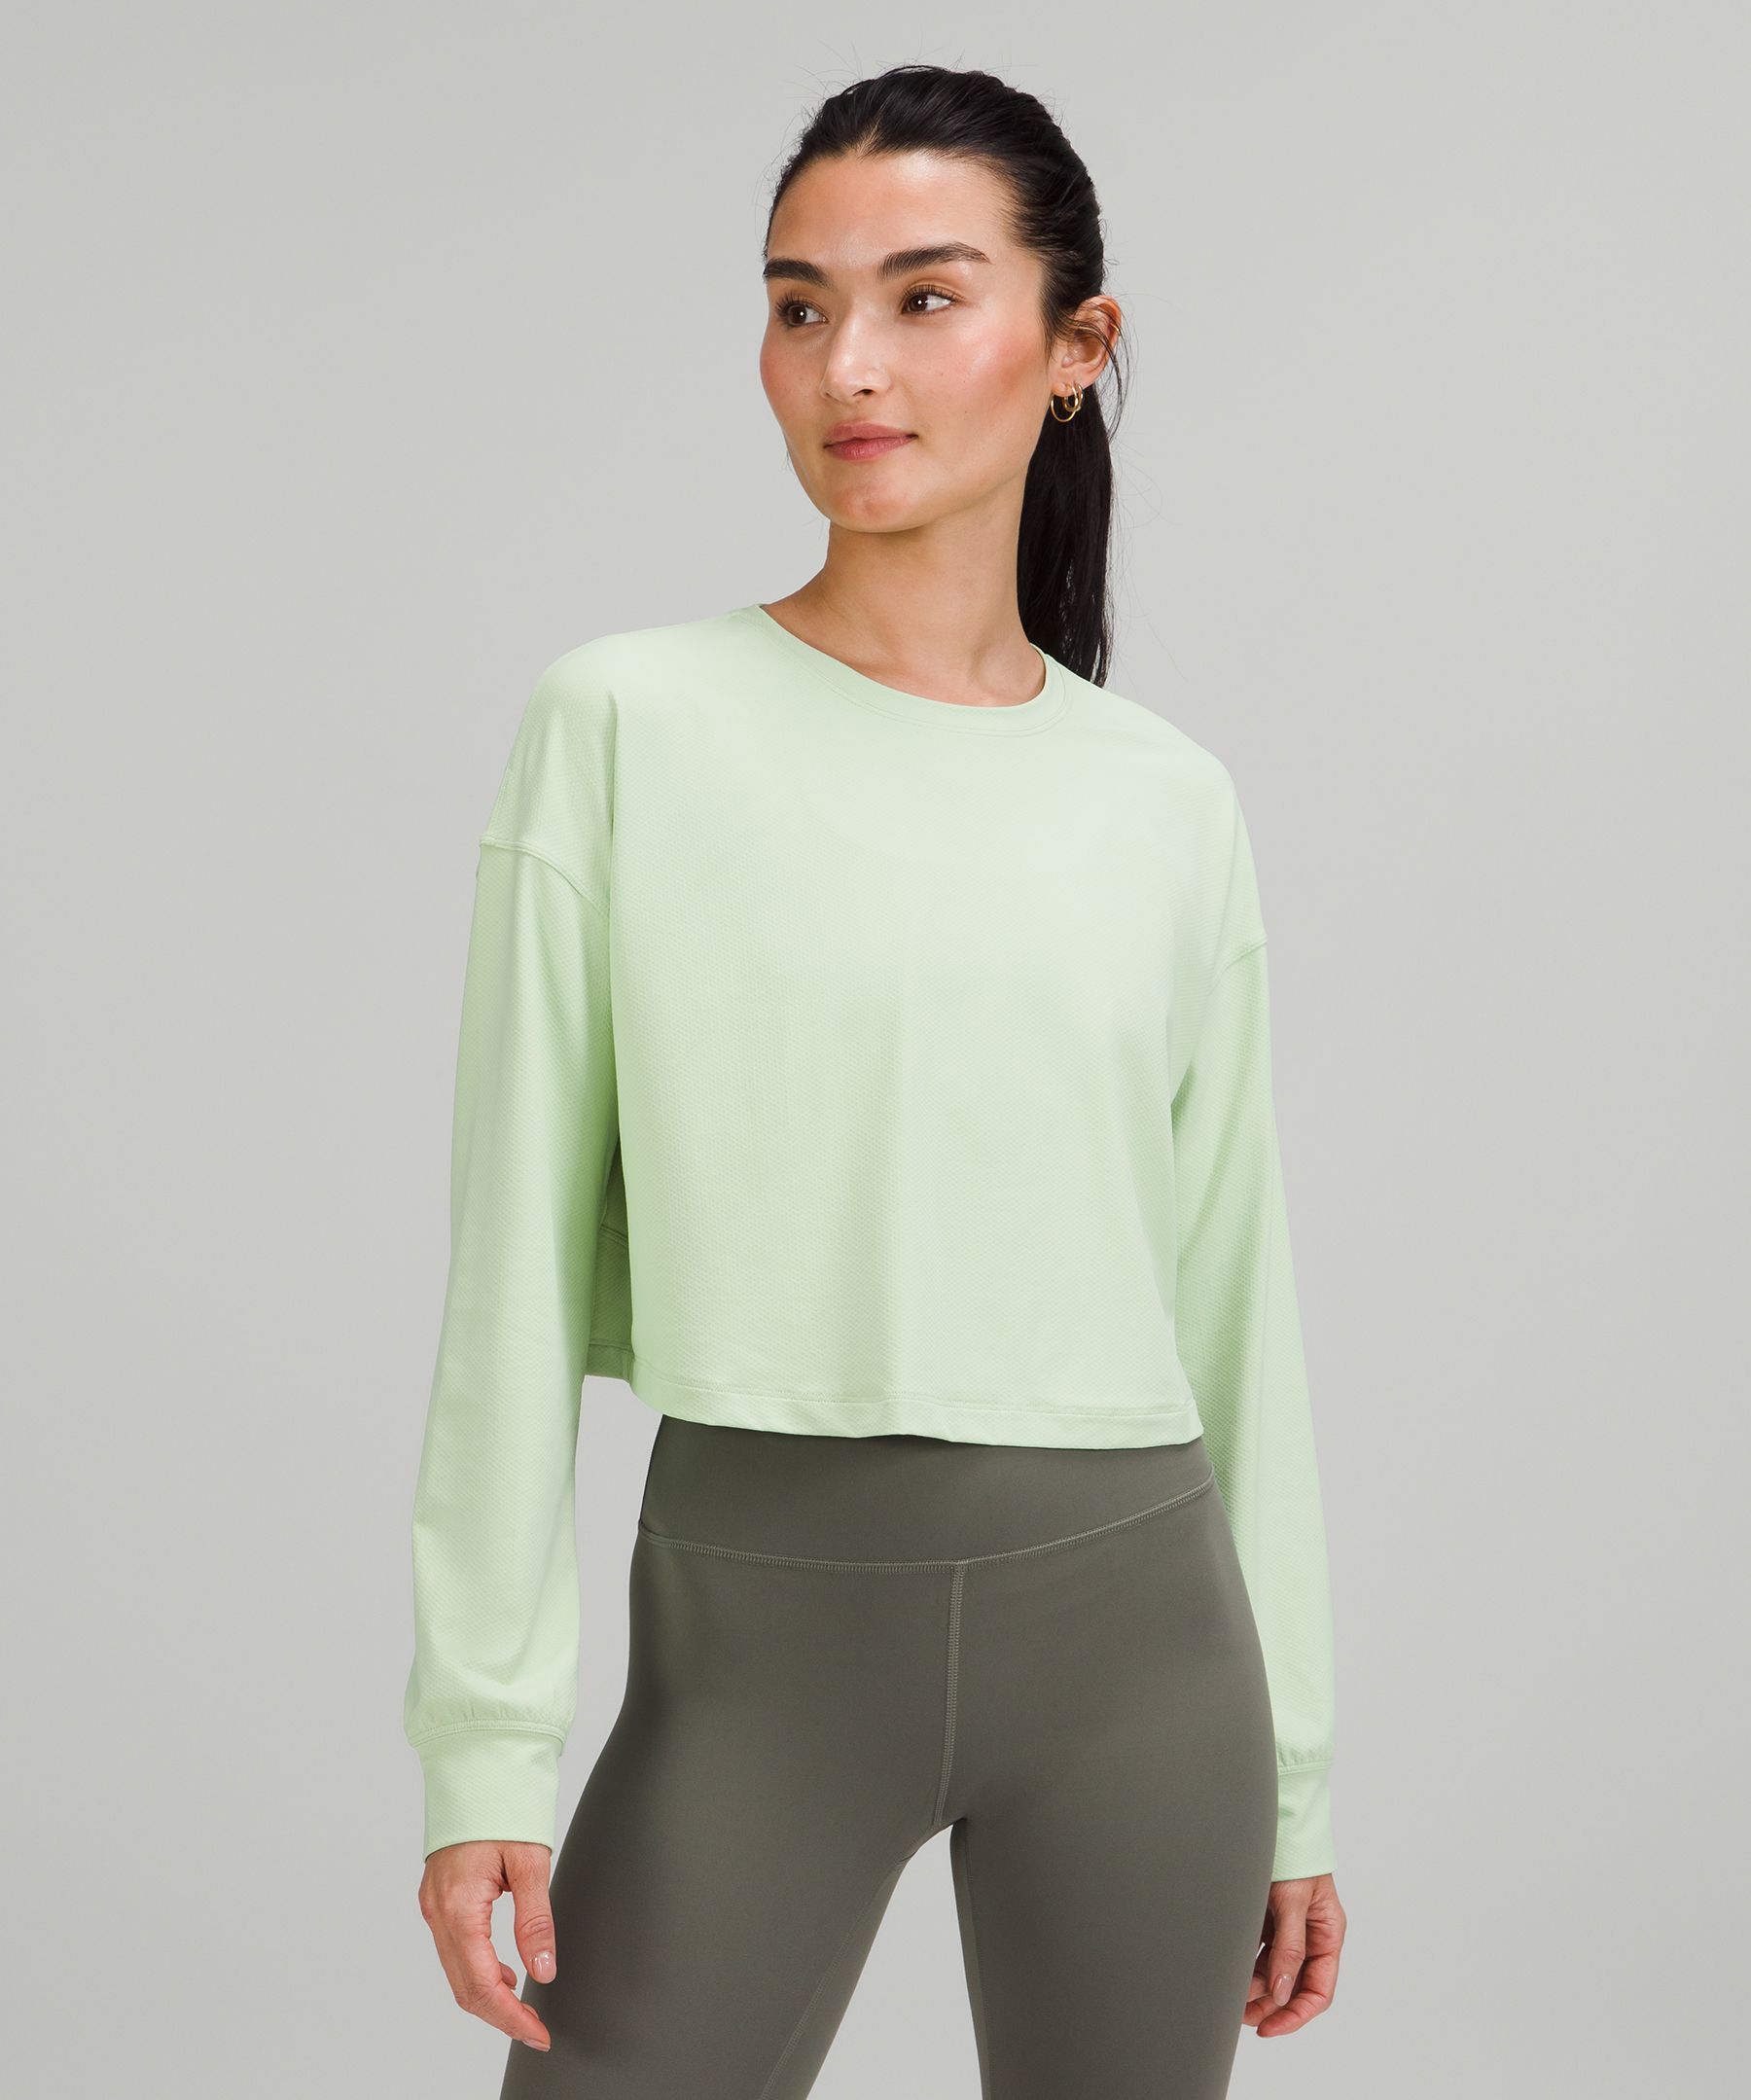 Women's Green Long Sleeve Shirts | lululemon